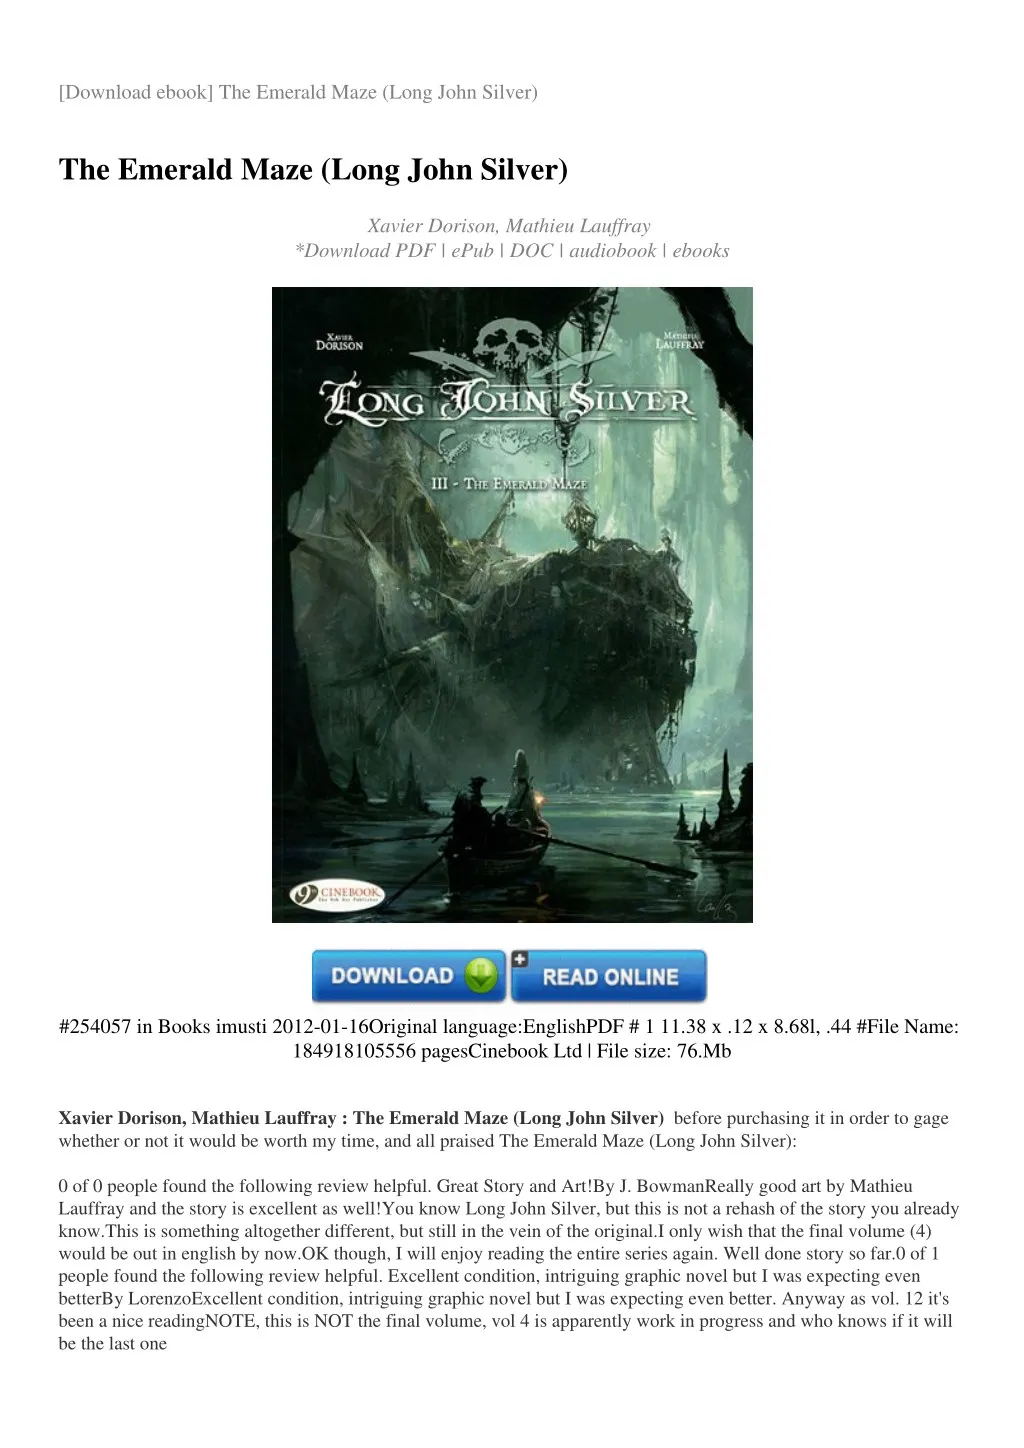 download ebook the emerald maze long john silver